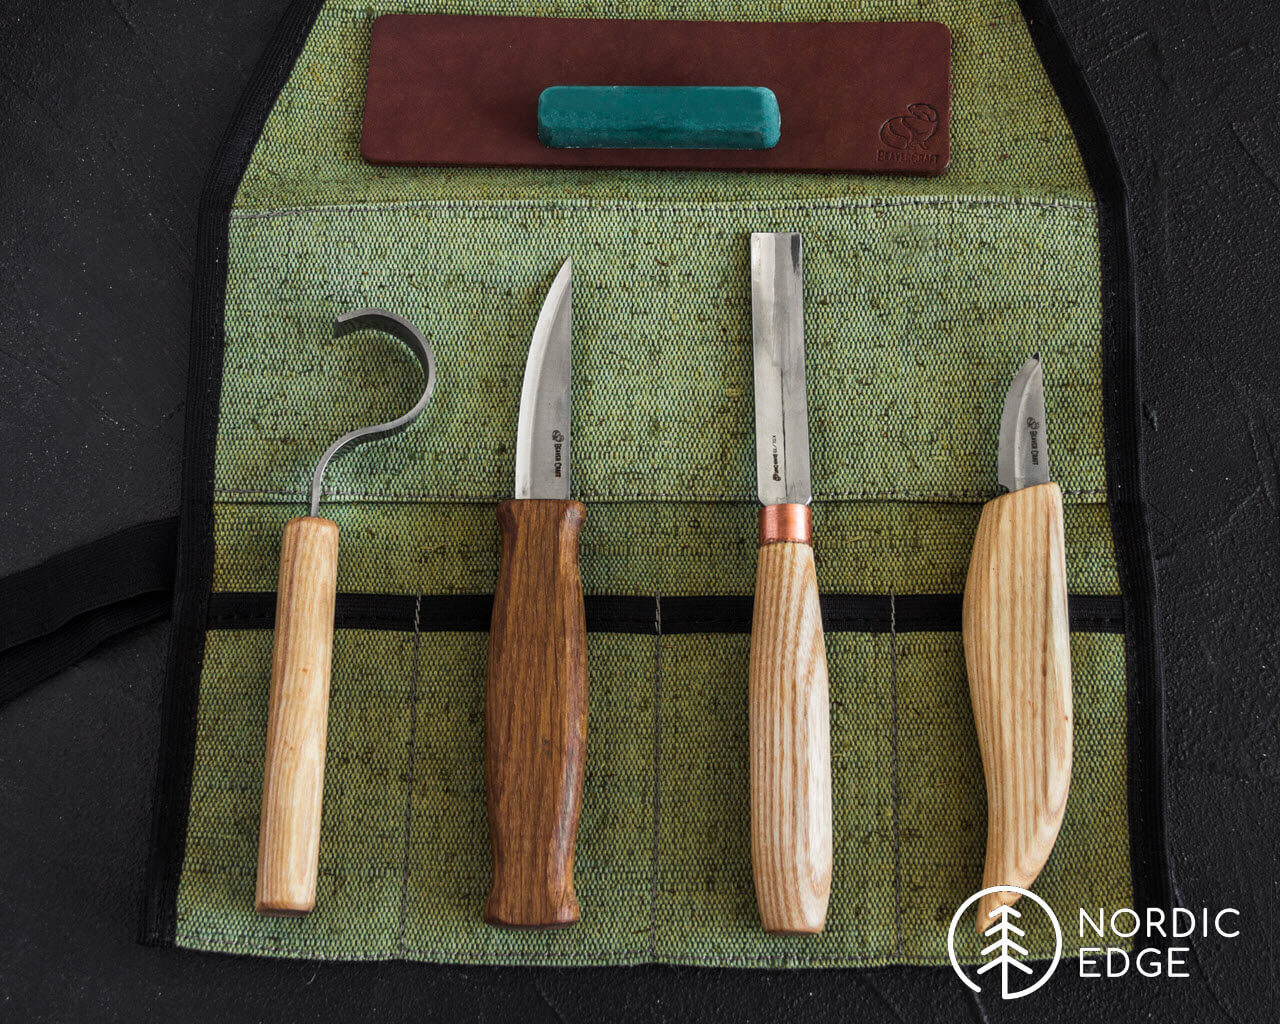 BeaverCraft Spoon and Kuksa Carving Professional Set – Buckleap